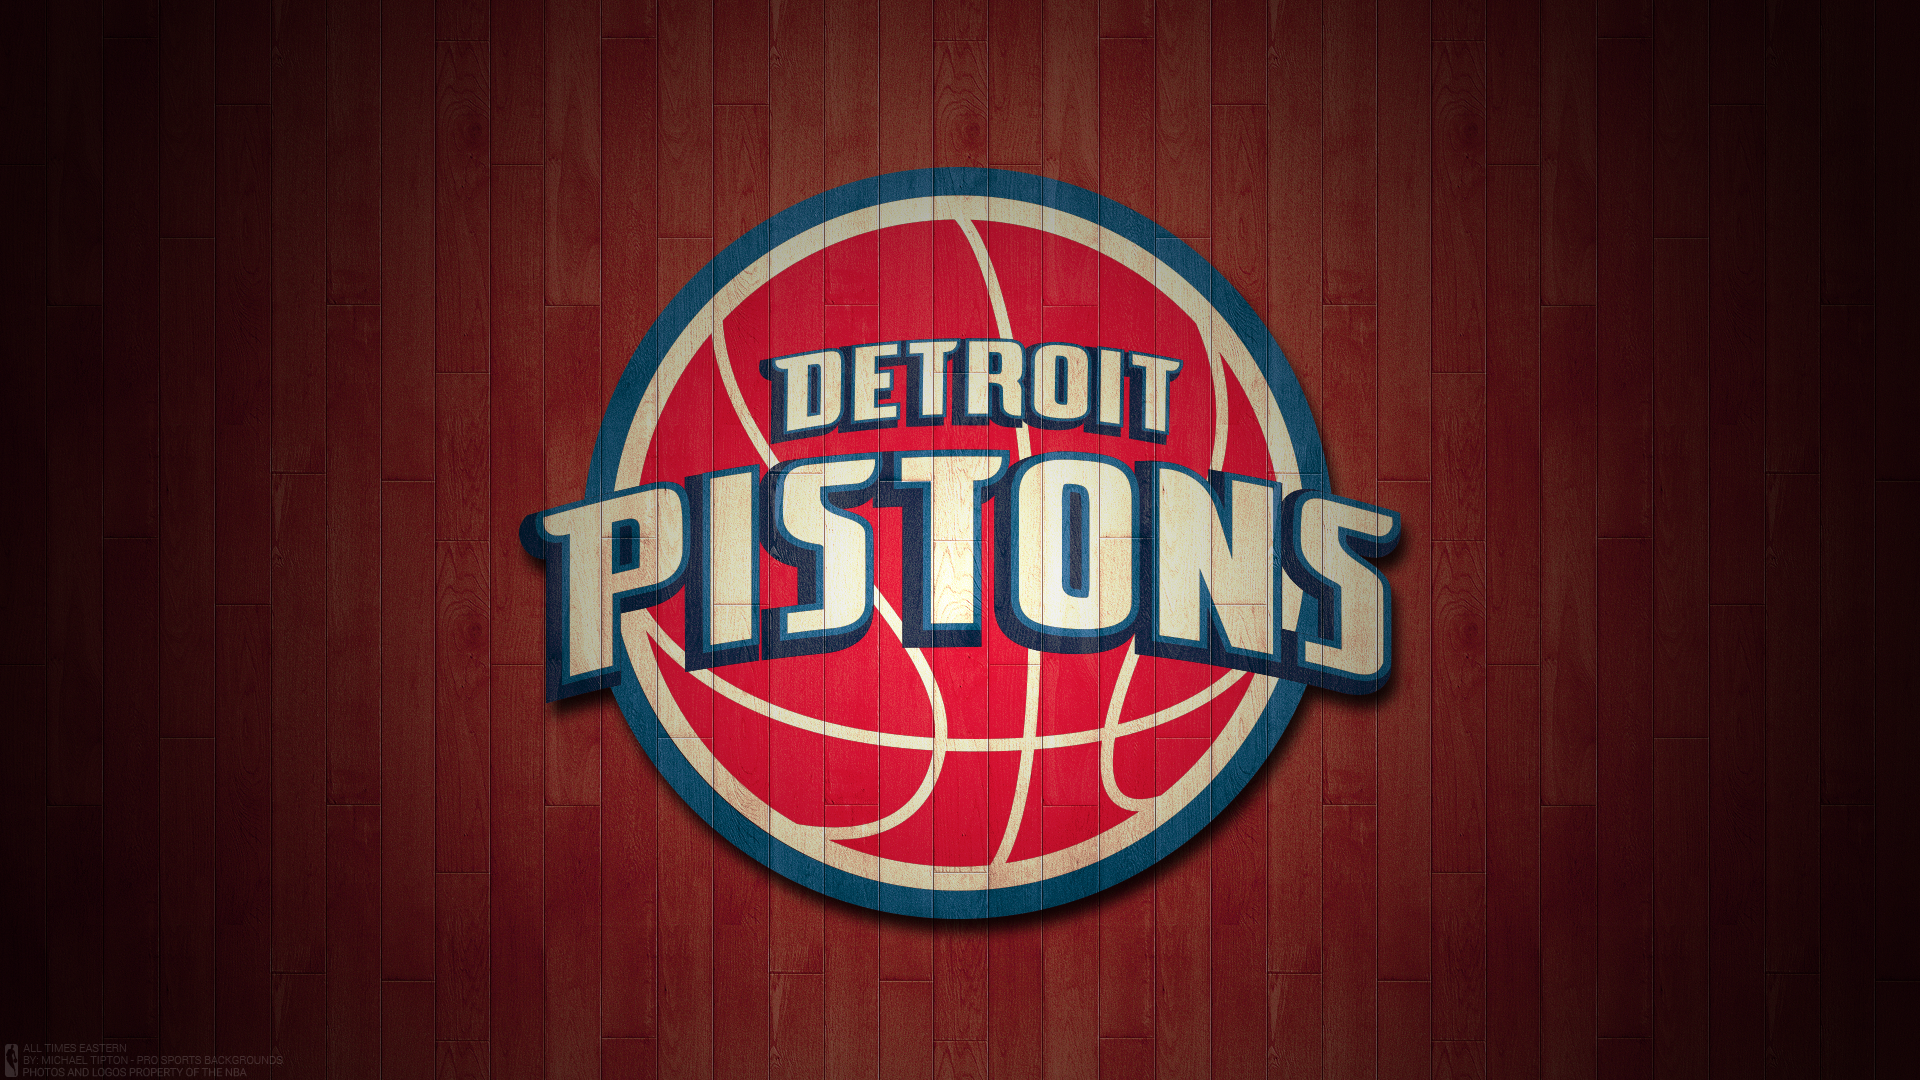 Detroit Pistons news